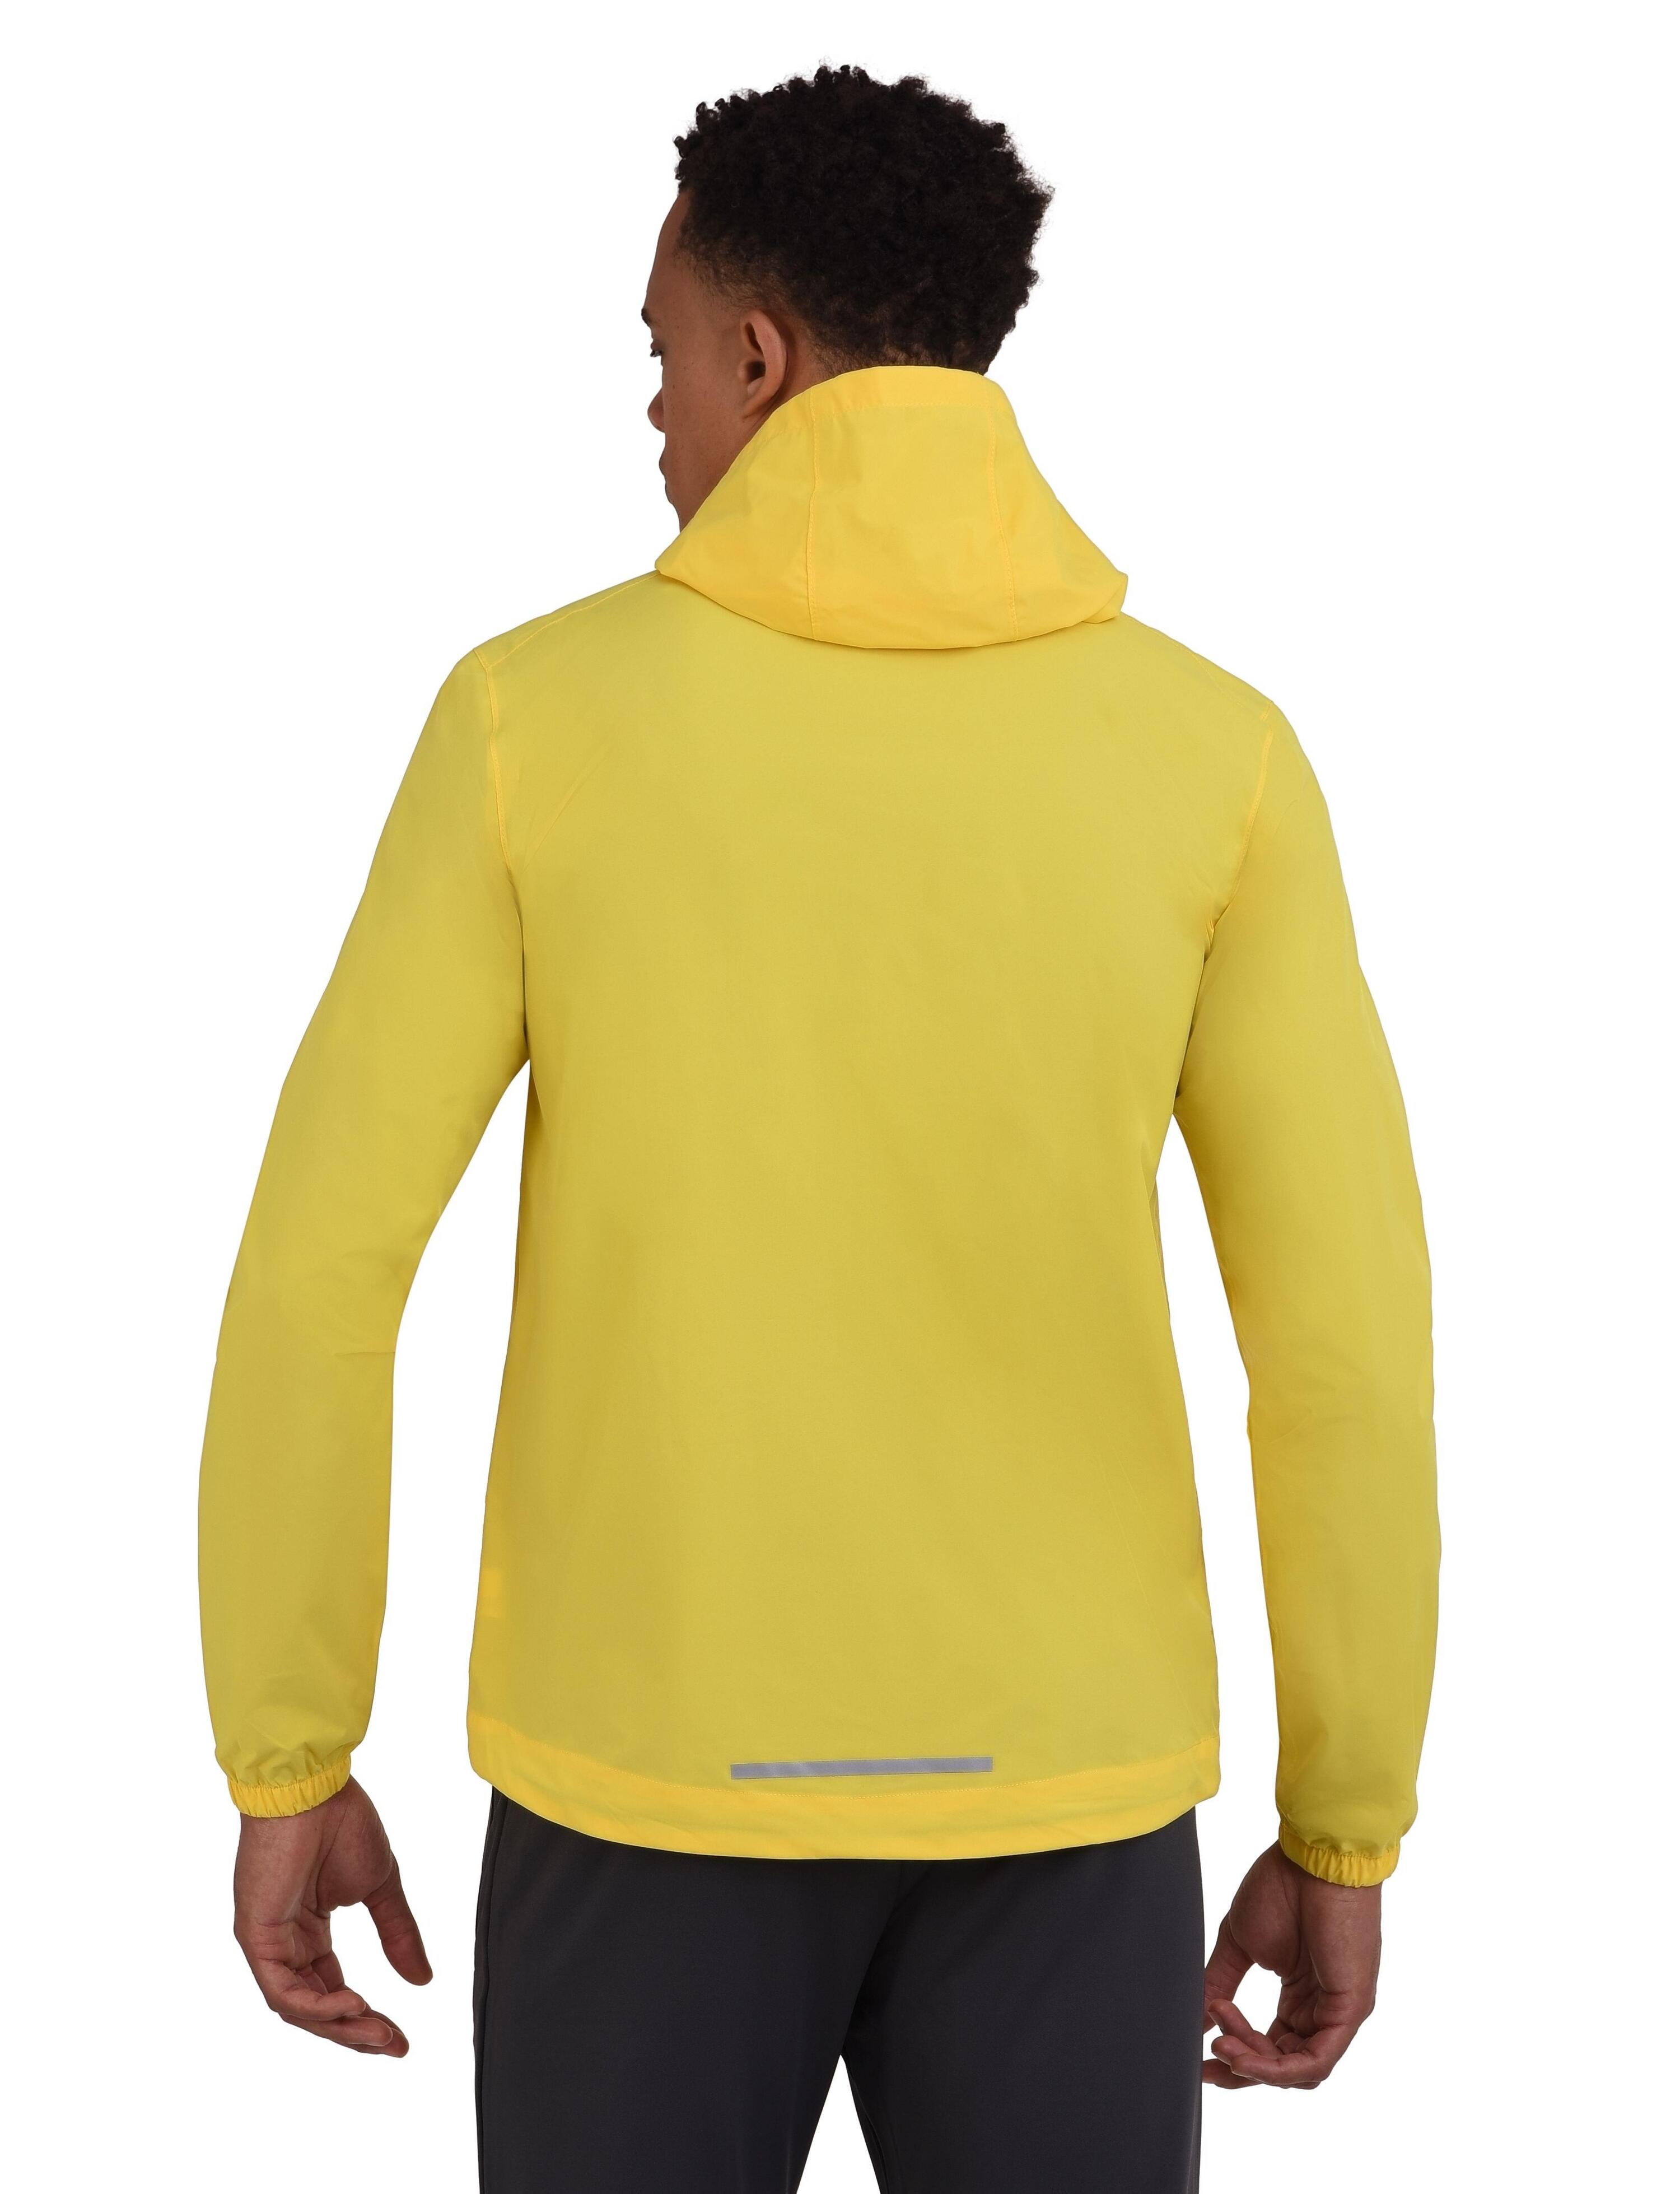 Men's AirLite Rain Jacket with Zip Pockets - Vibrant Yellow 3/5